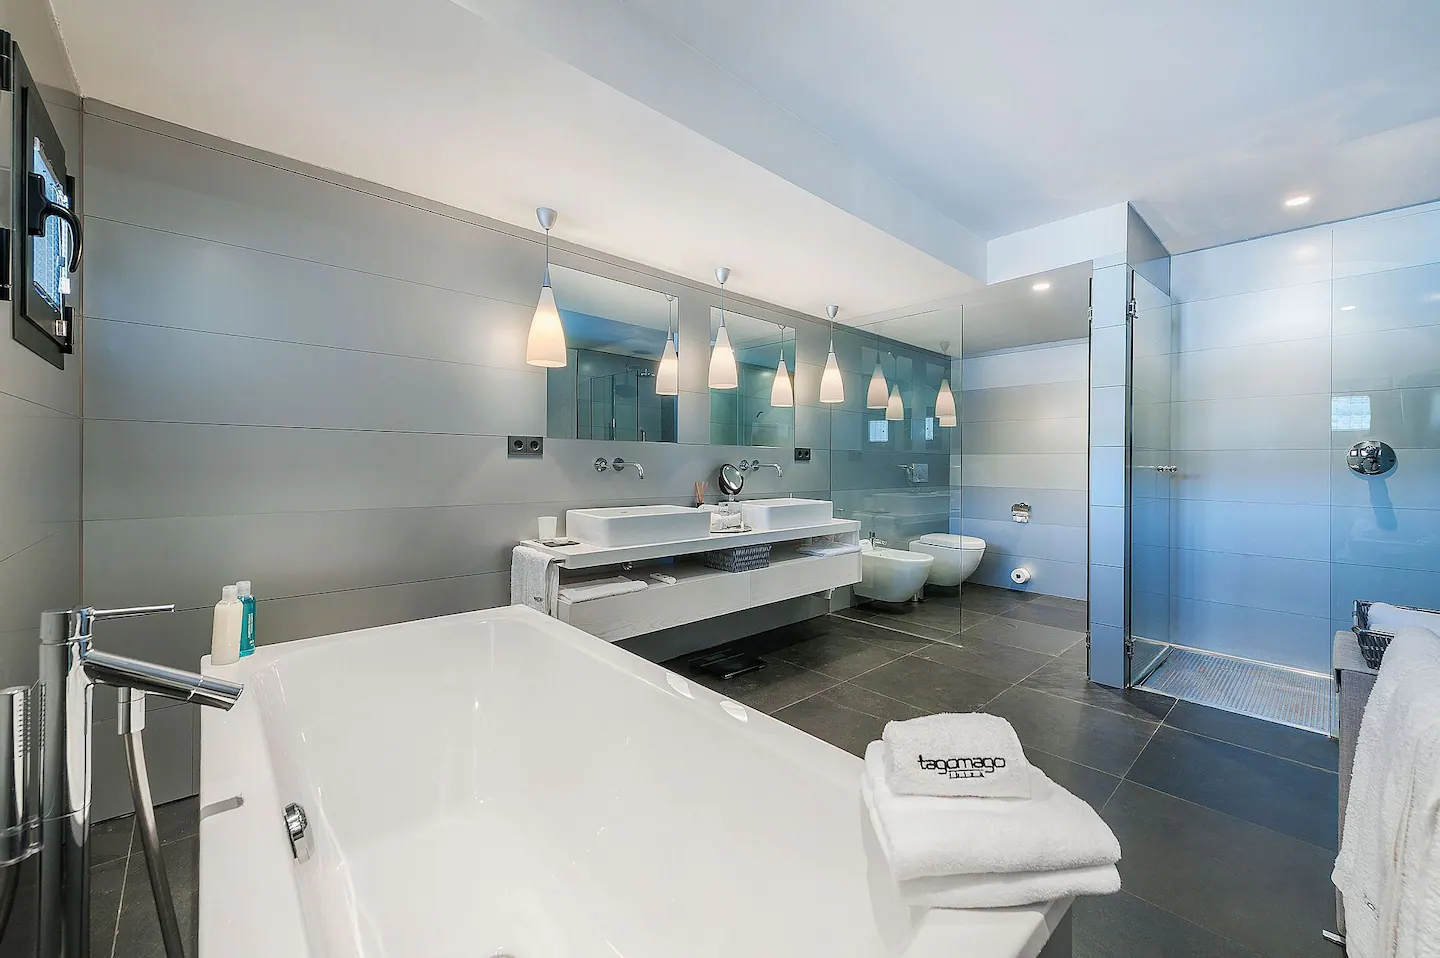 Luxurious spa-like bathroom experience